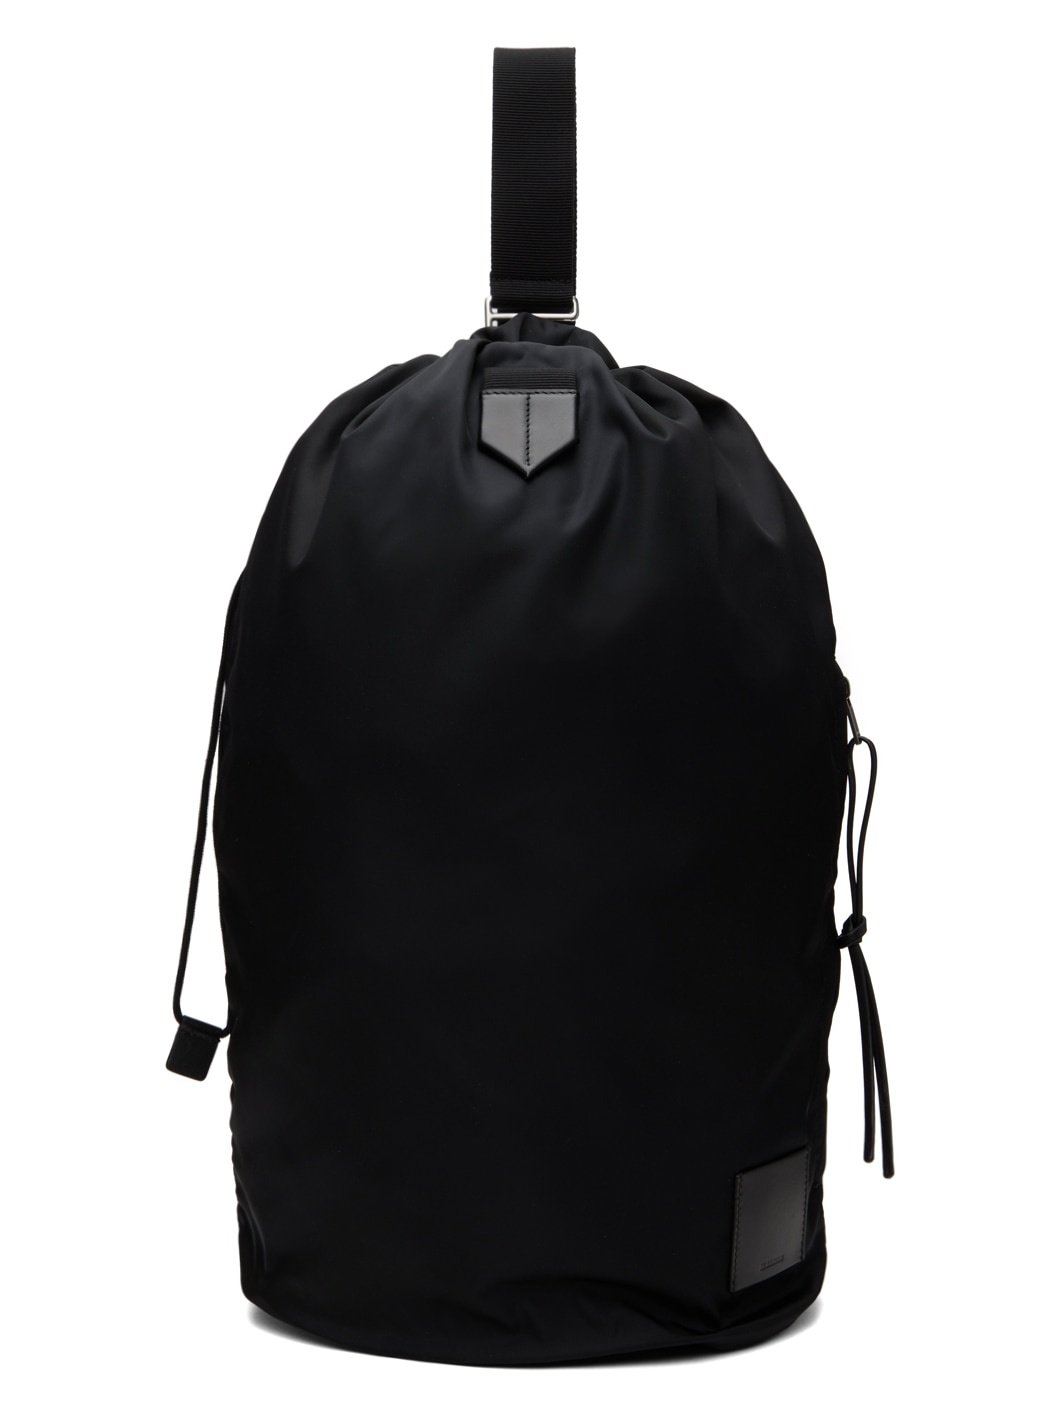 Black Drawstring Bag - 1